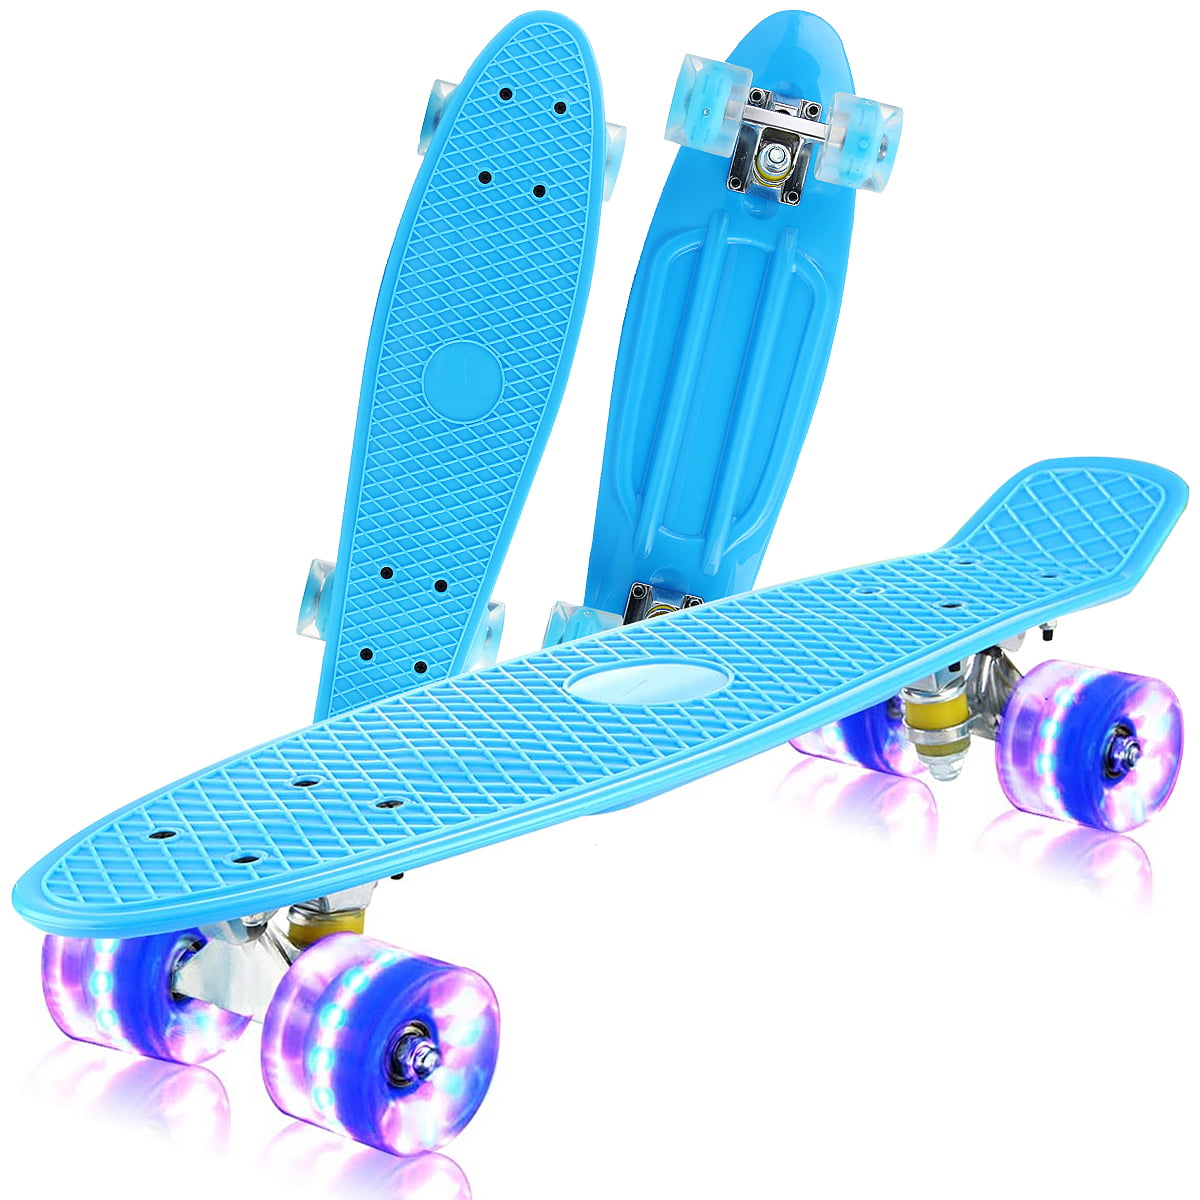 RUNYI 24 inch Complete Plastic Mini Cruiser Retro Skateboard with Handle Colorful LED Light PU Wheels for Girls Boys Kids Adult Teens Beginners